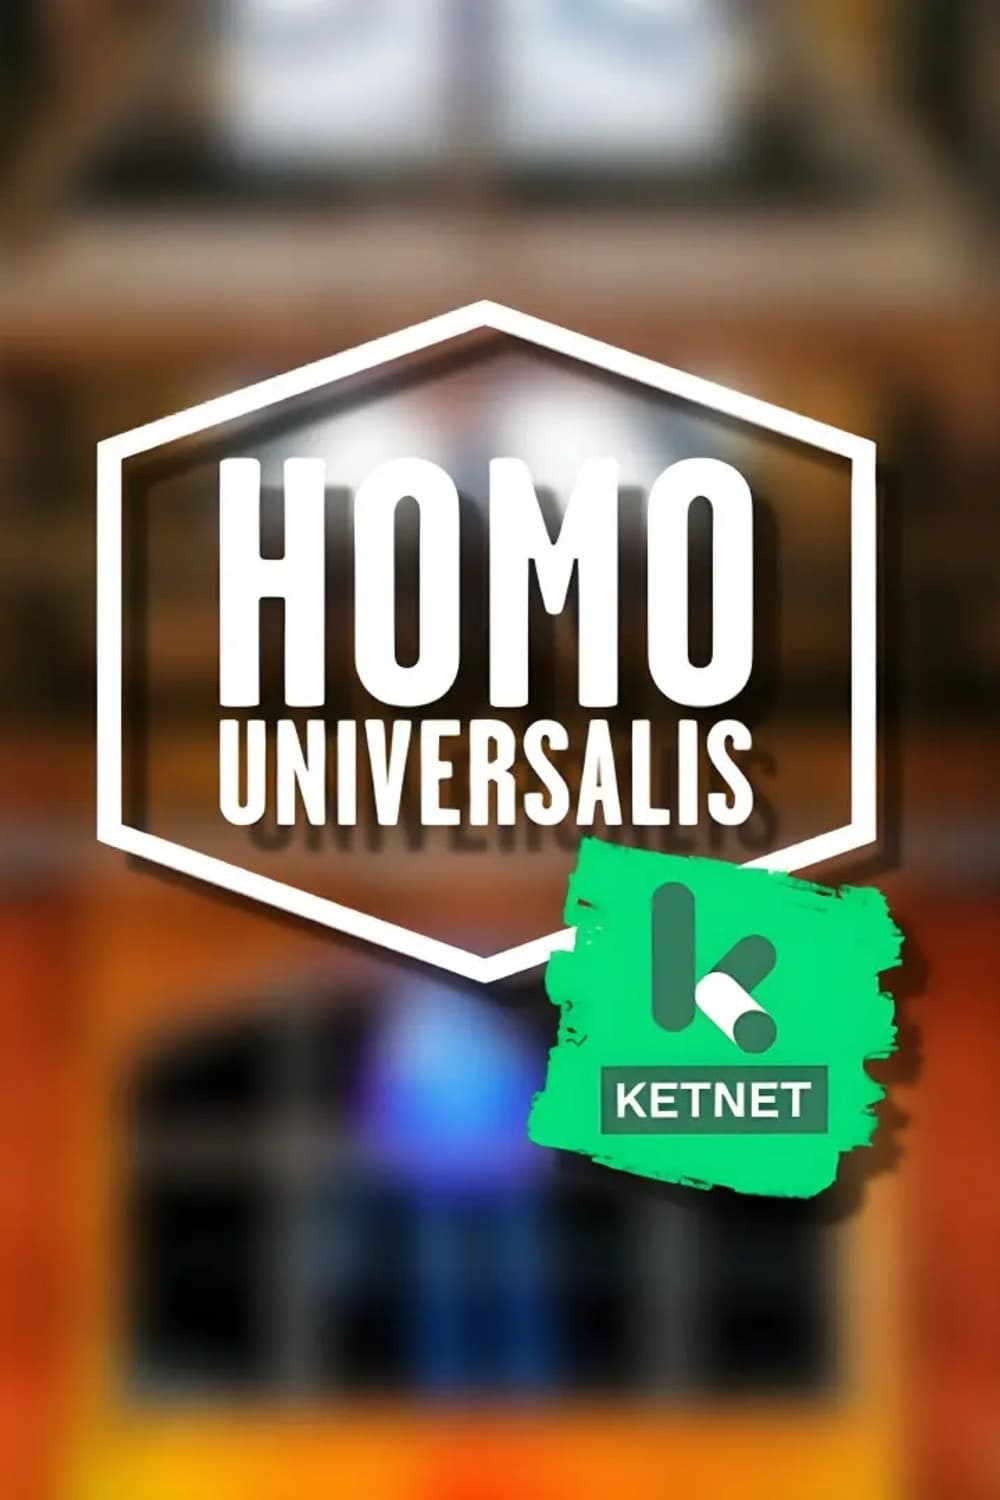 Homo universalis Ketnet